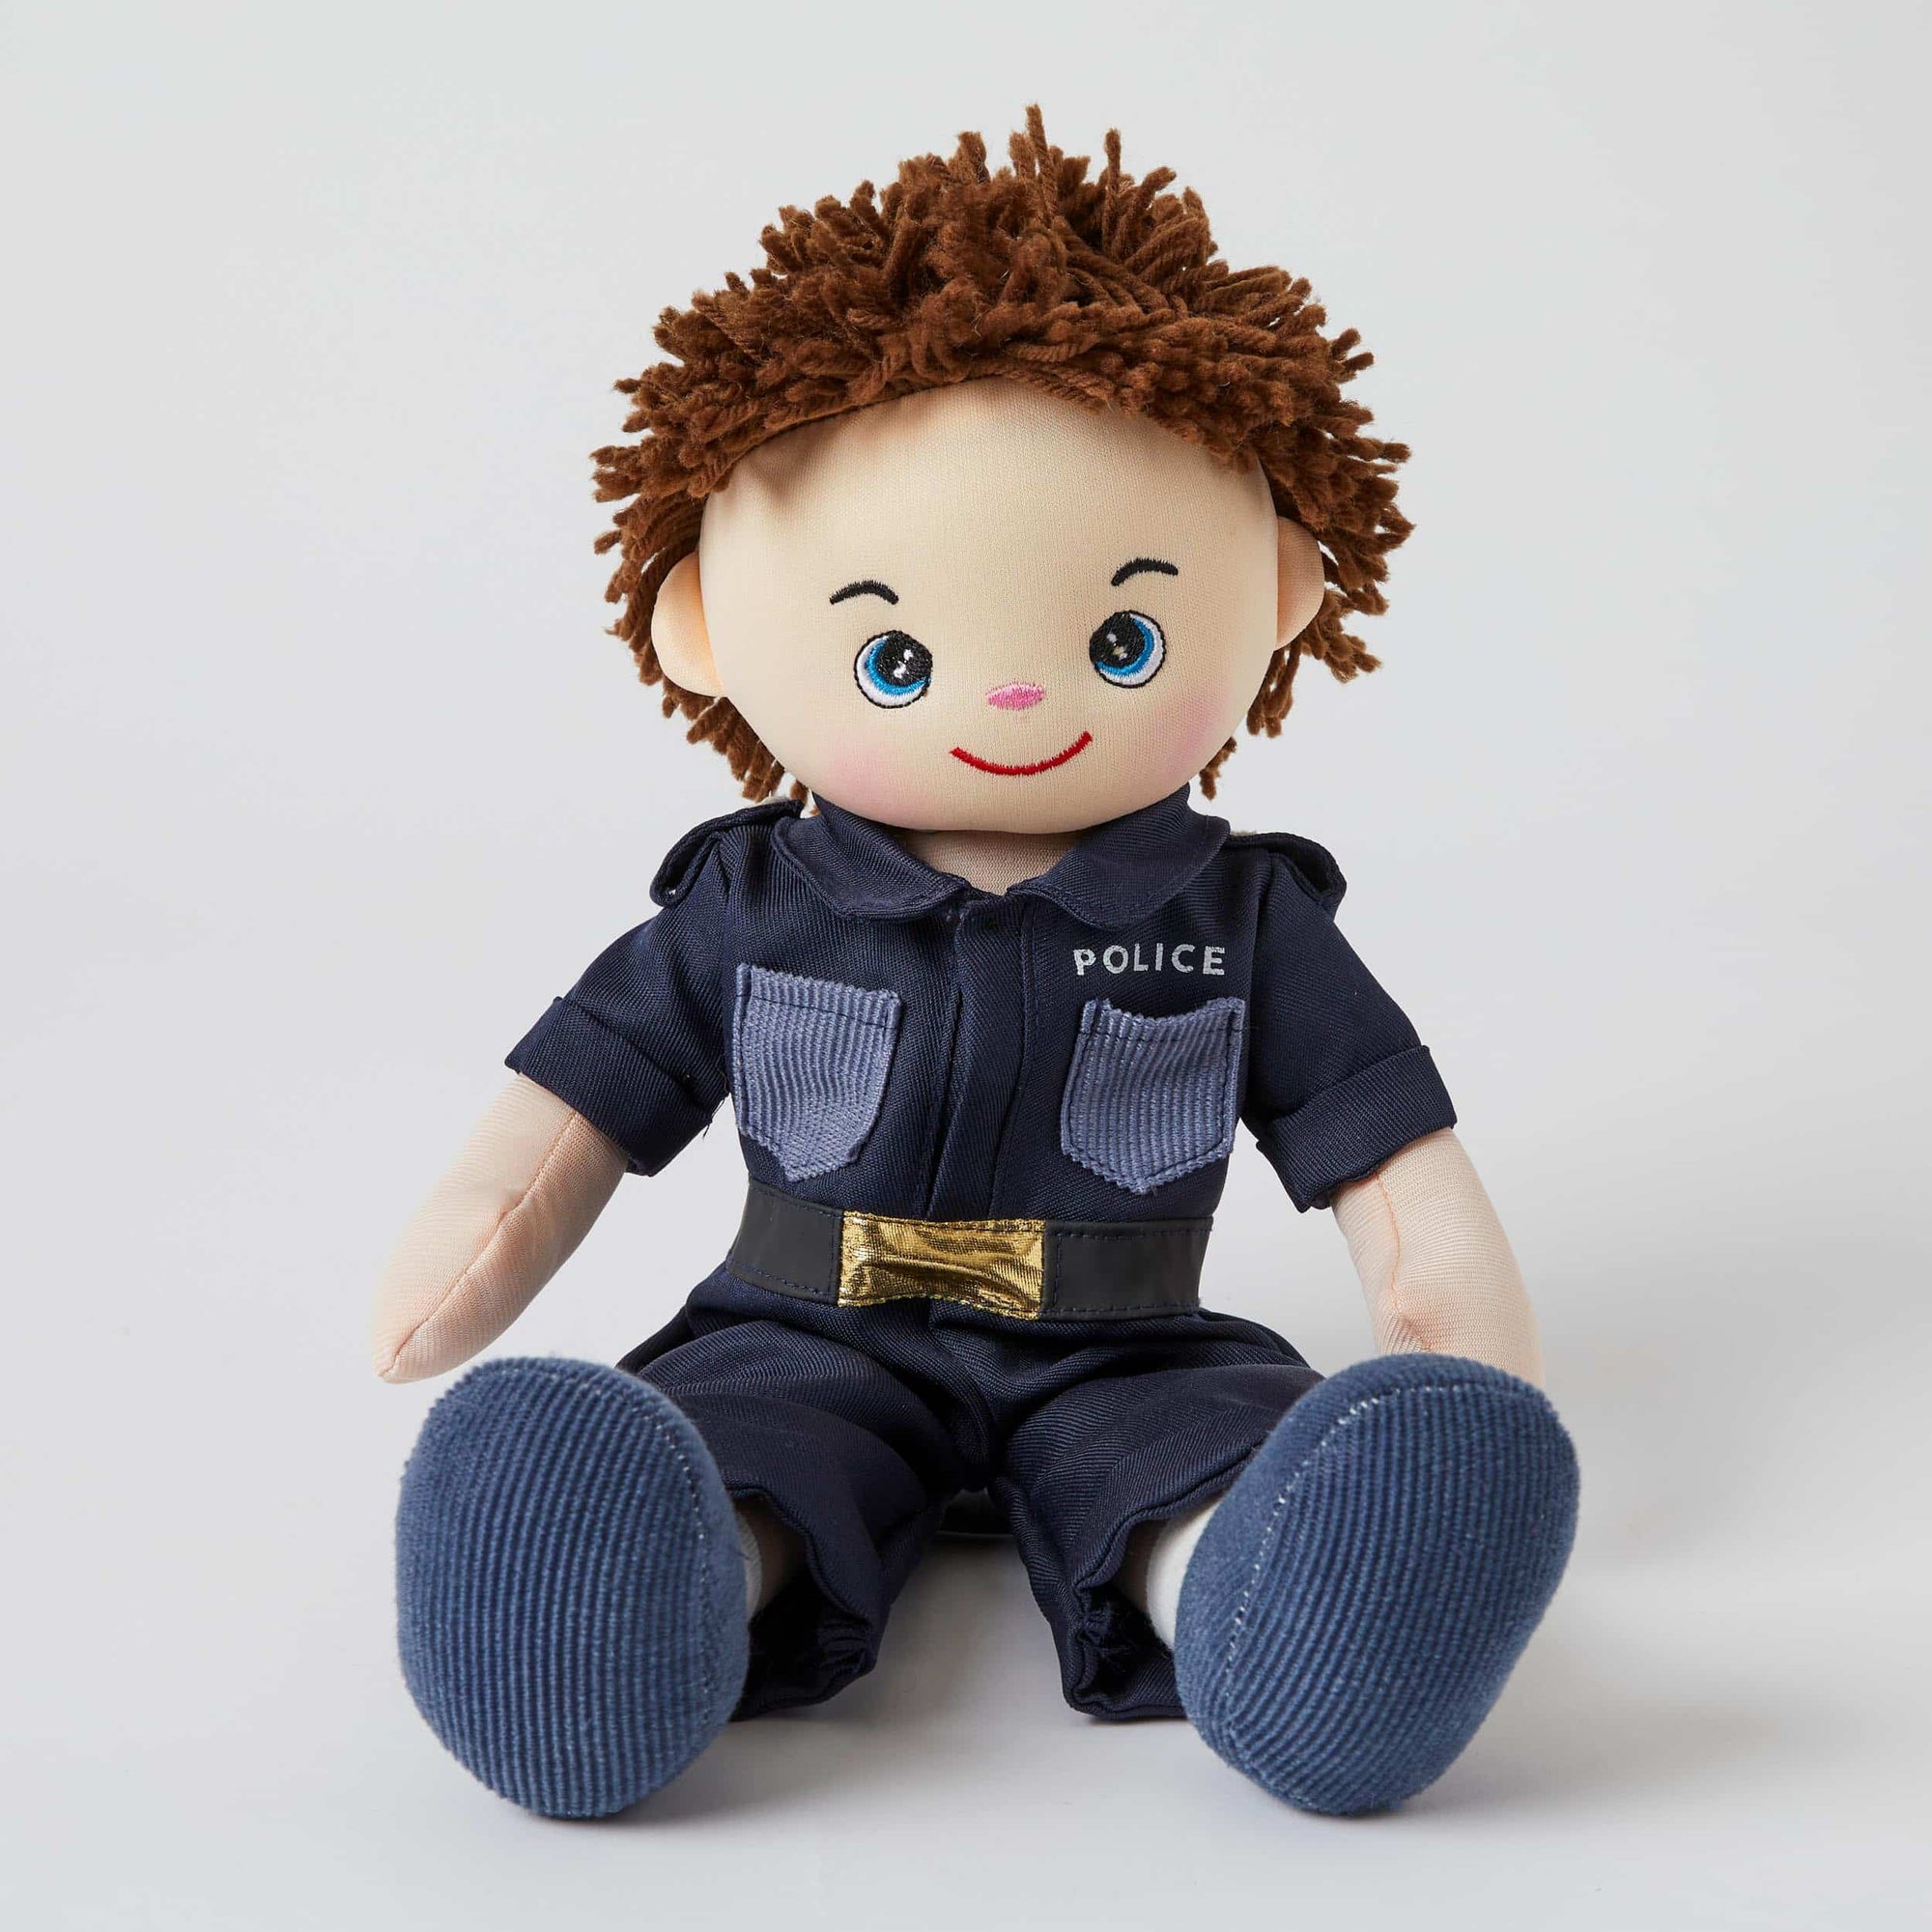 My Best Friend Lewis - Police Officer Doll - Boy